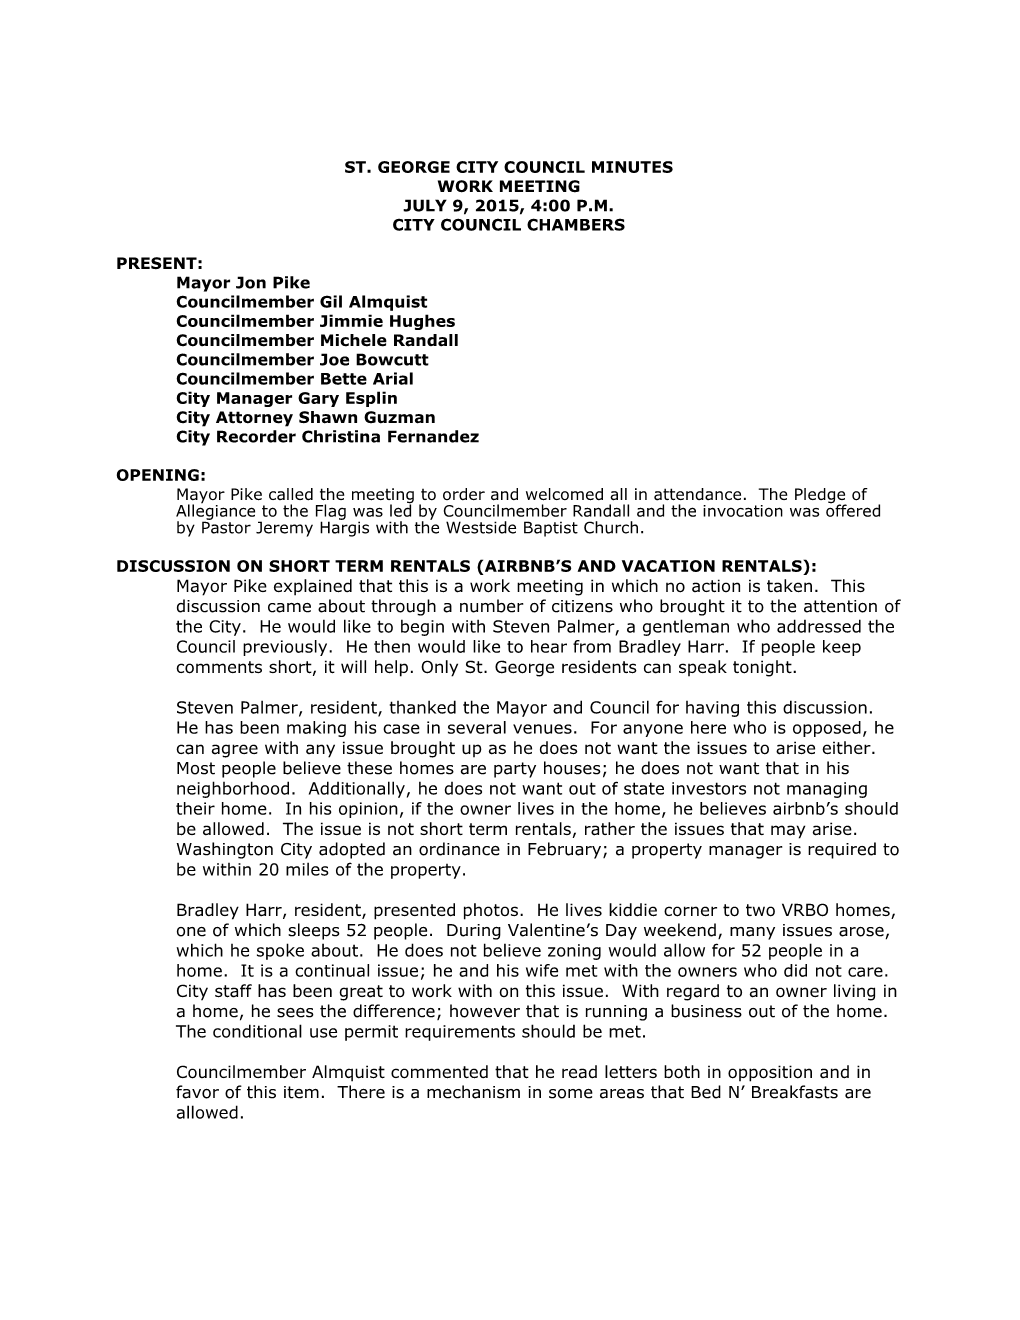 St. George City Council Minutes